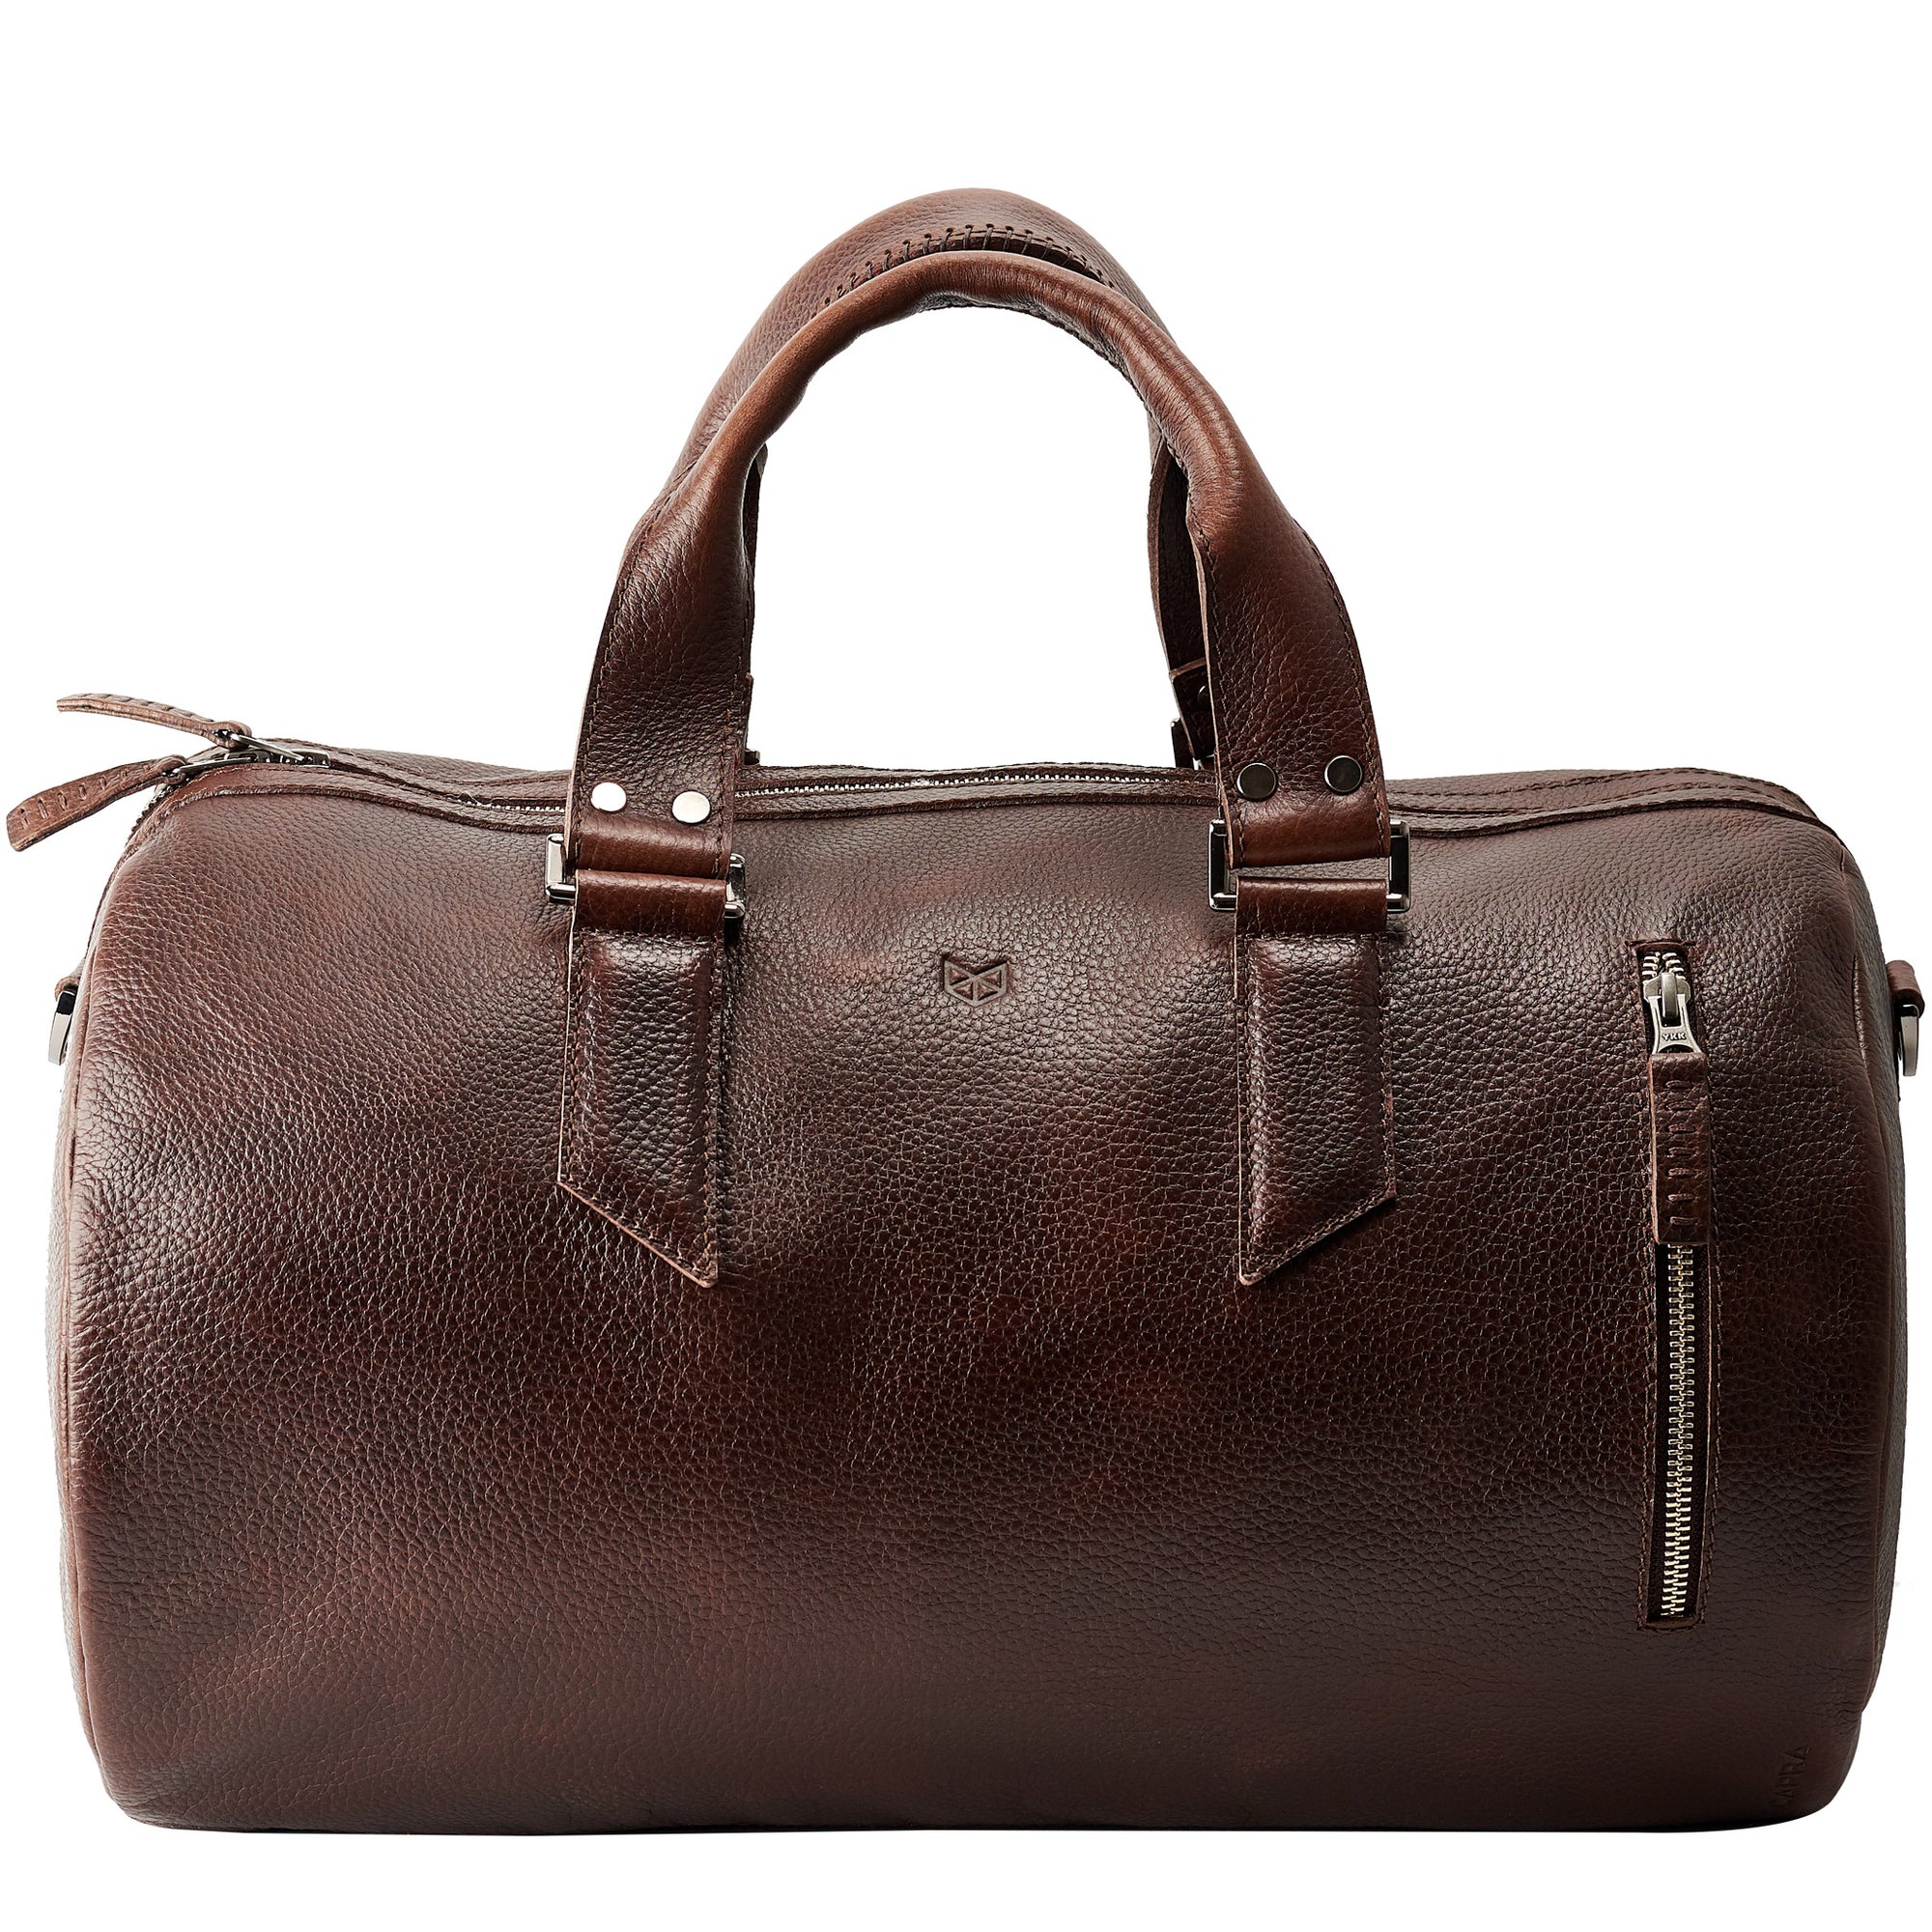 Dark Brown Duffle leather travel bag for men. Gym athletic bag 